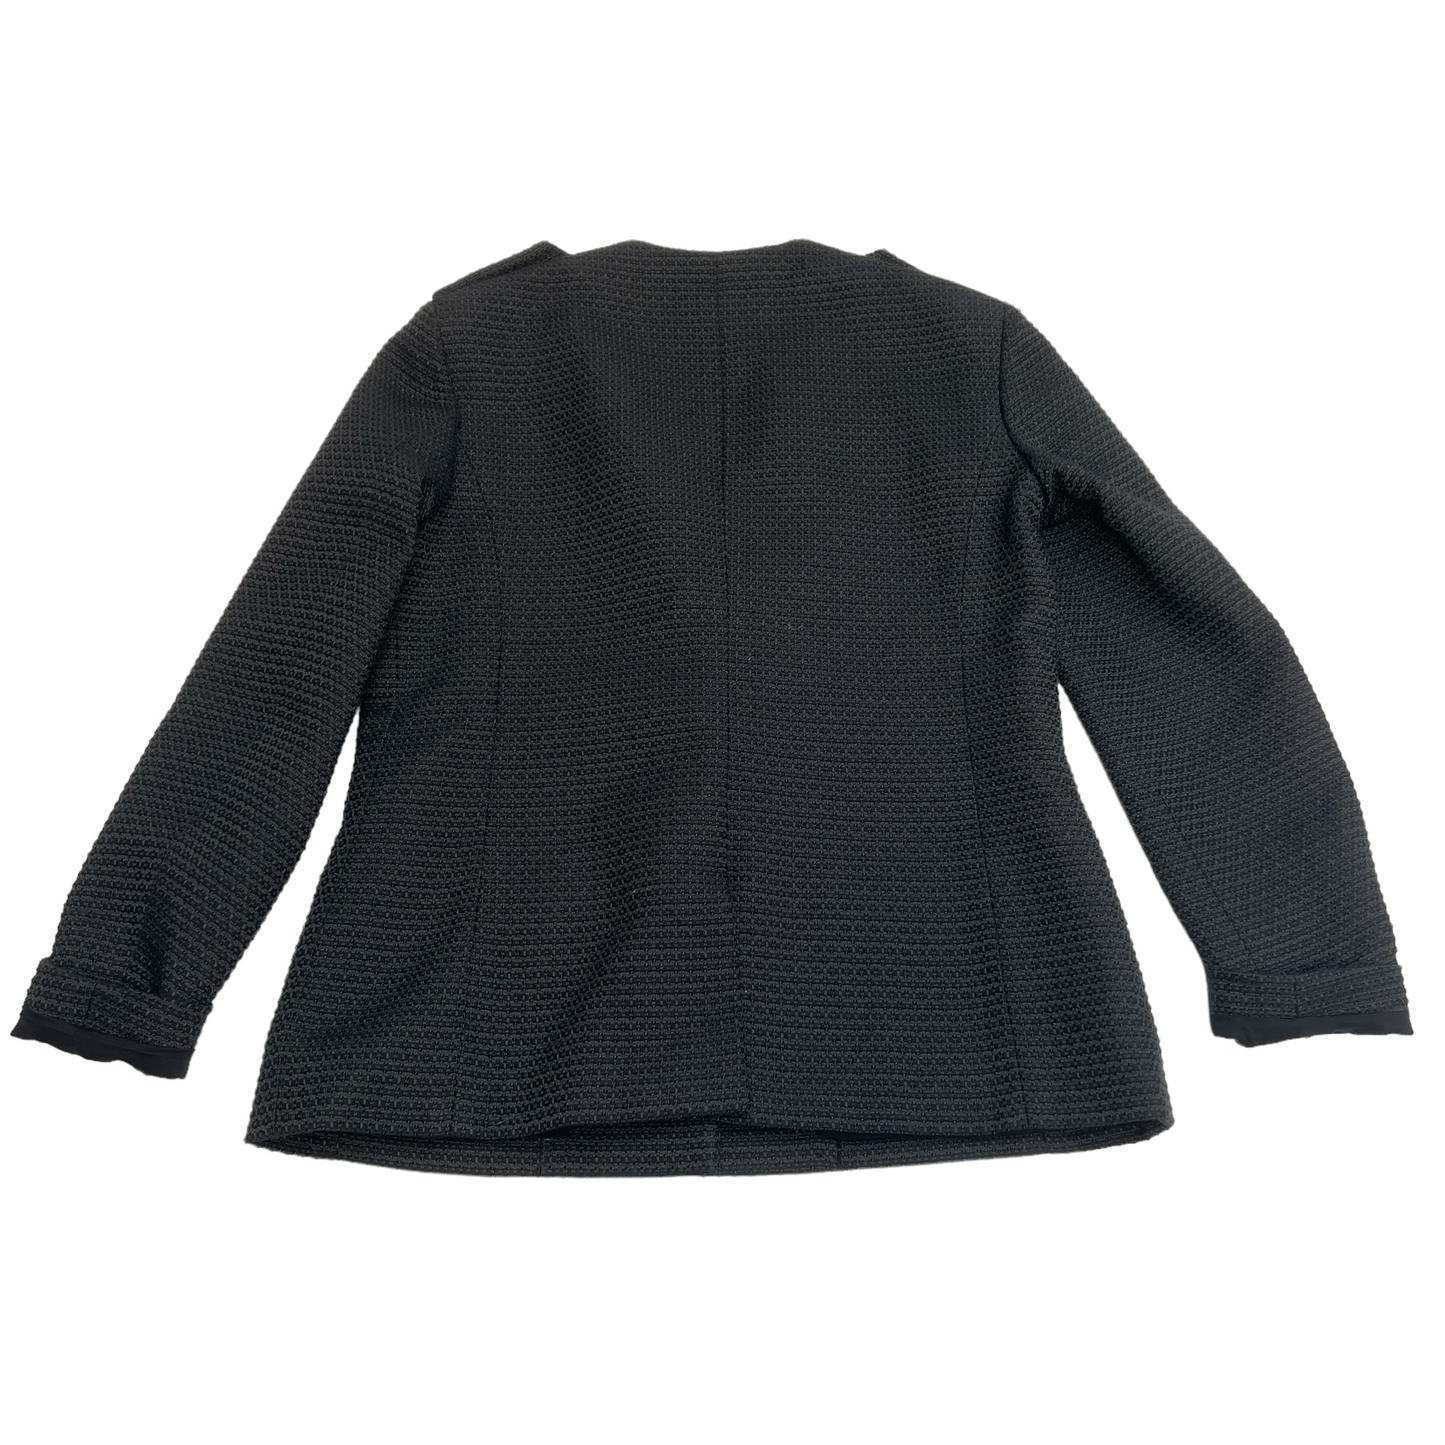 Black Tweed Uniform Blazer - M